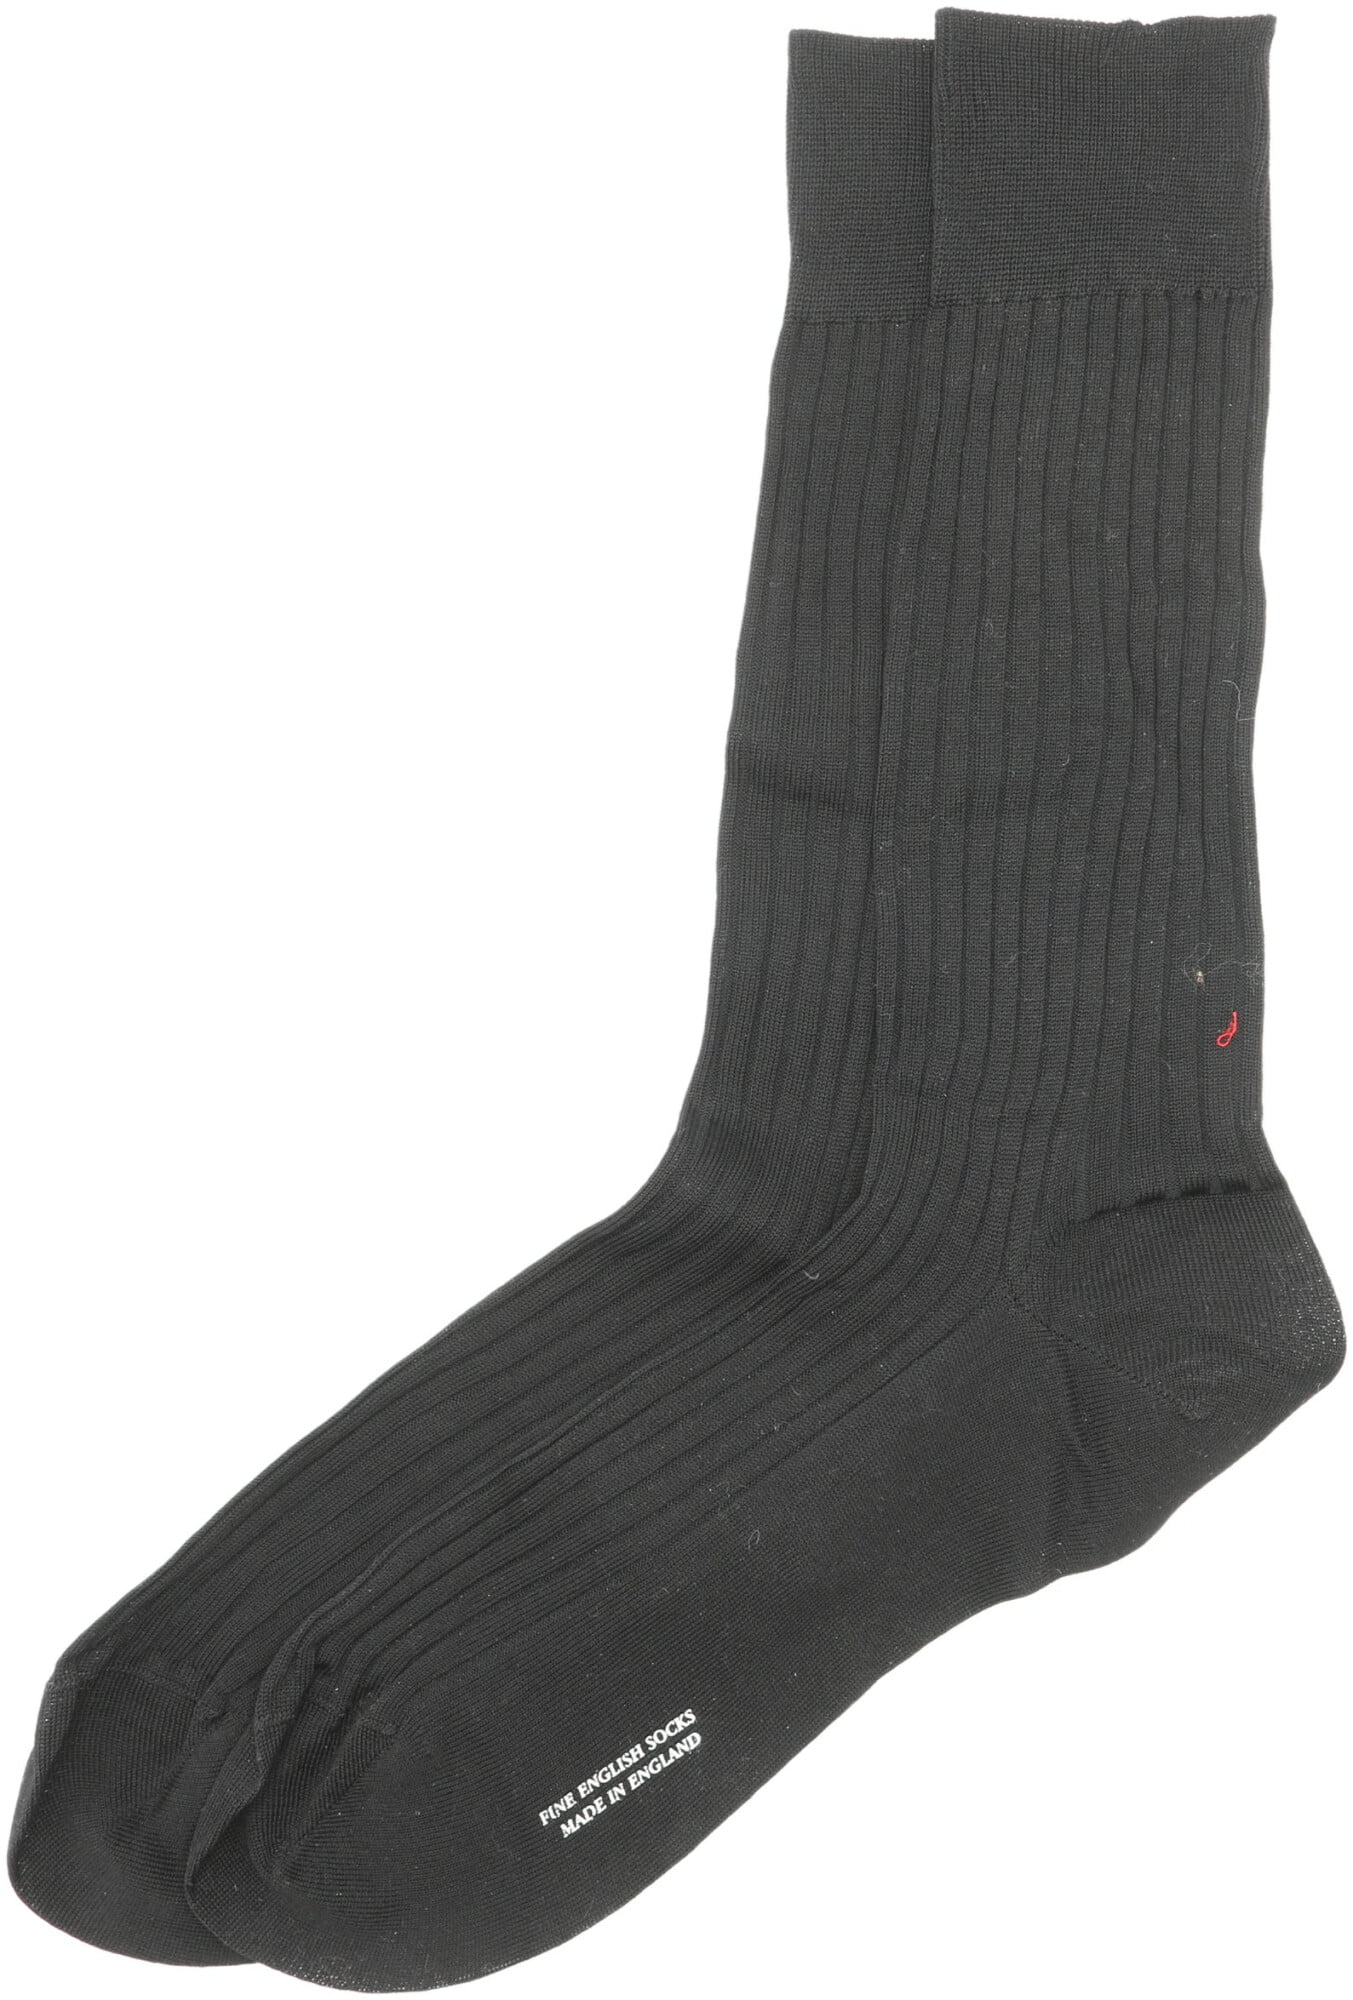 Mead warm men's merino wool boot socks in navyBy Pantherella 